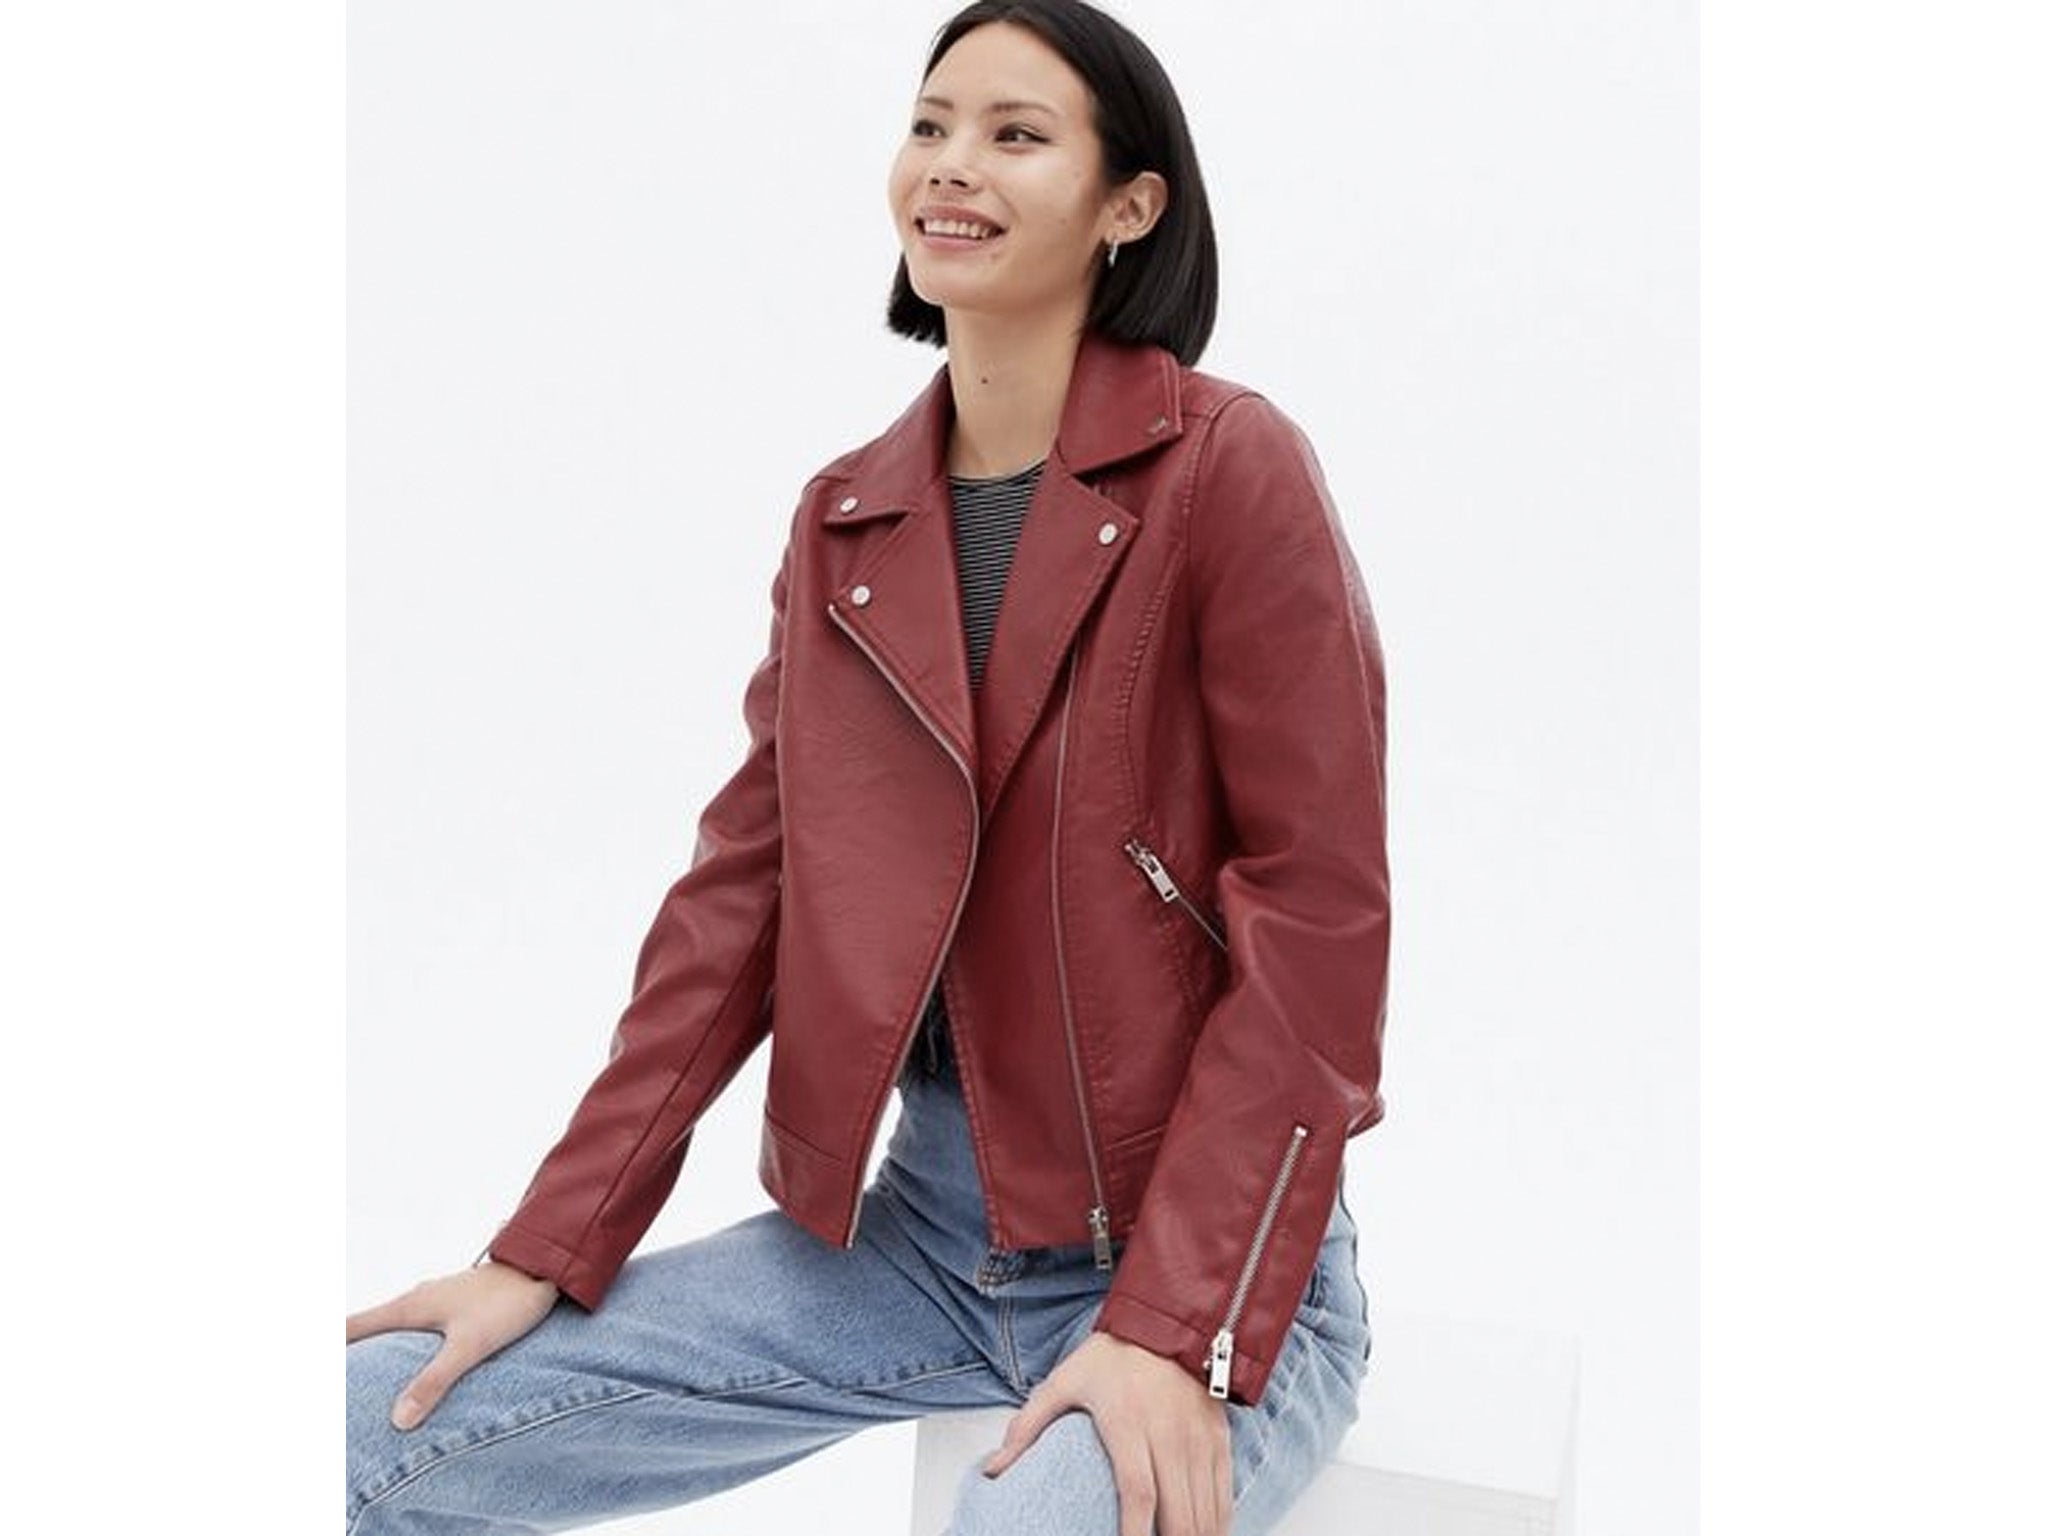 discount 91% Red M Quechua jacket WOMEN FASHION Jackets Jacket Sports 